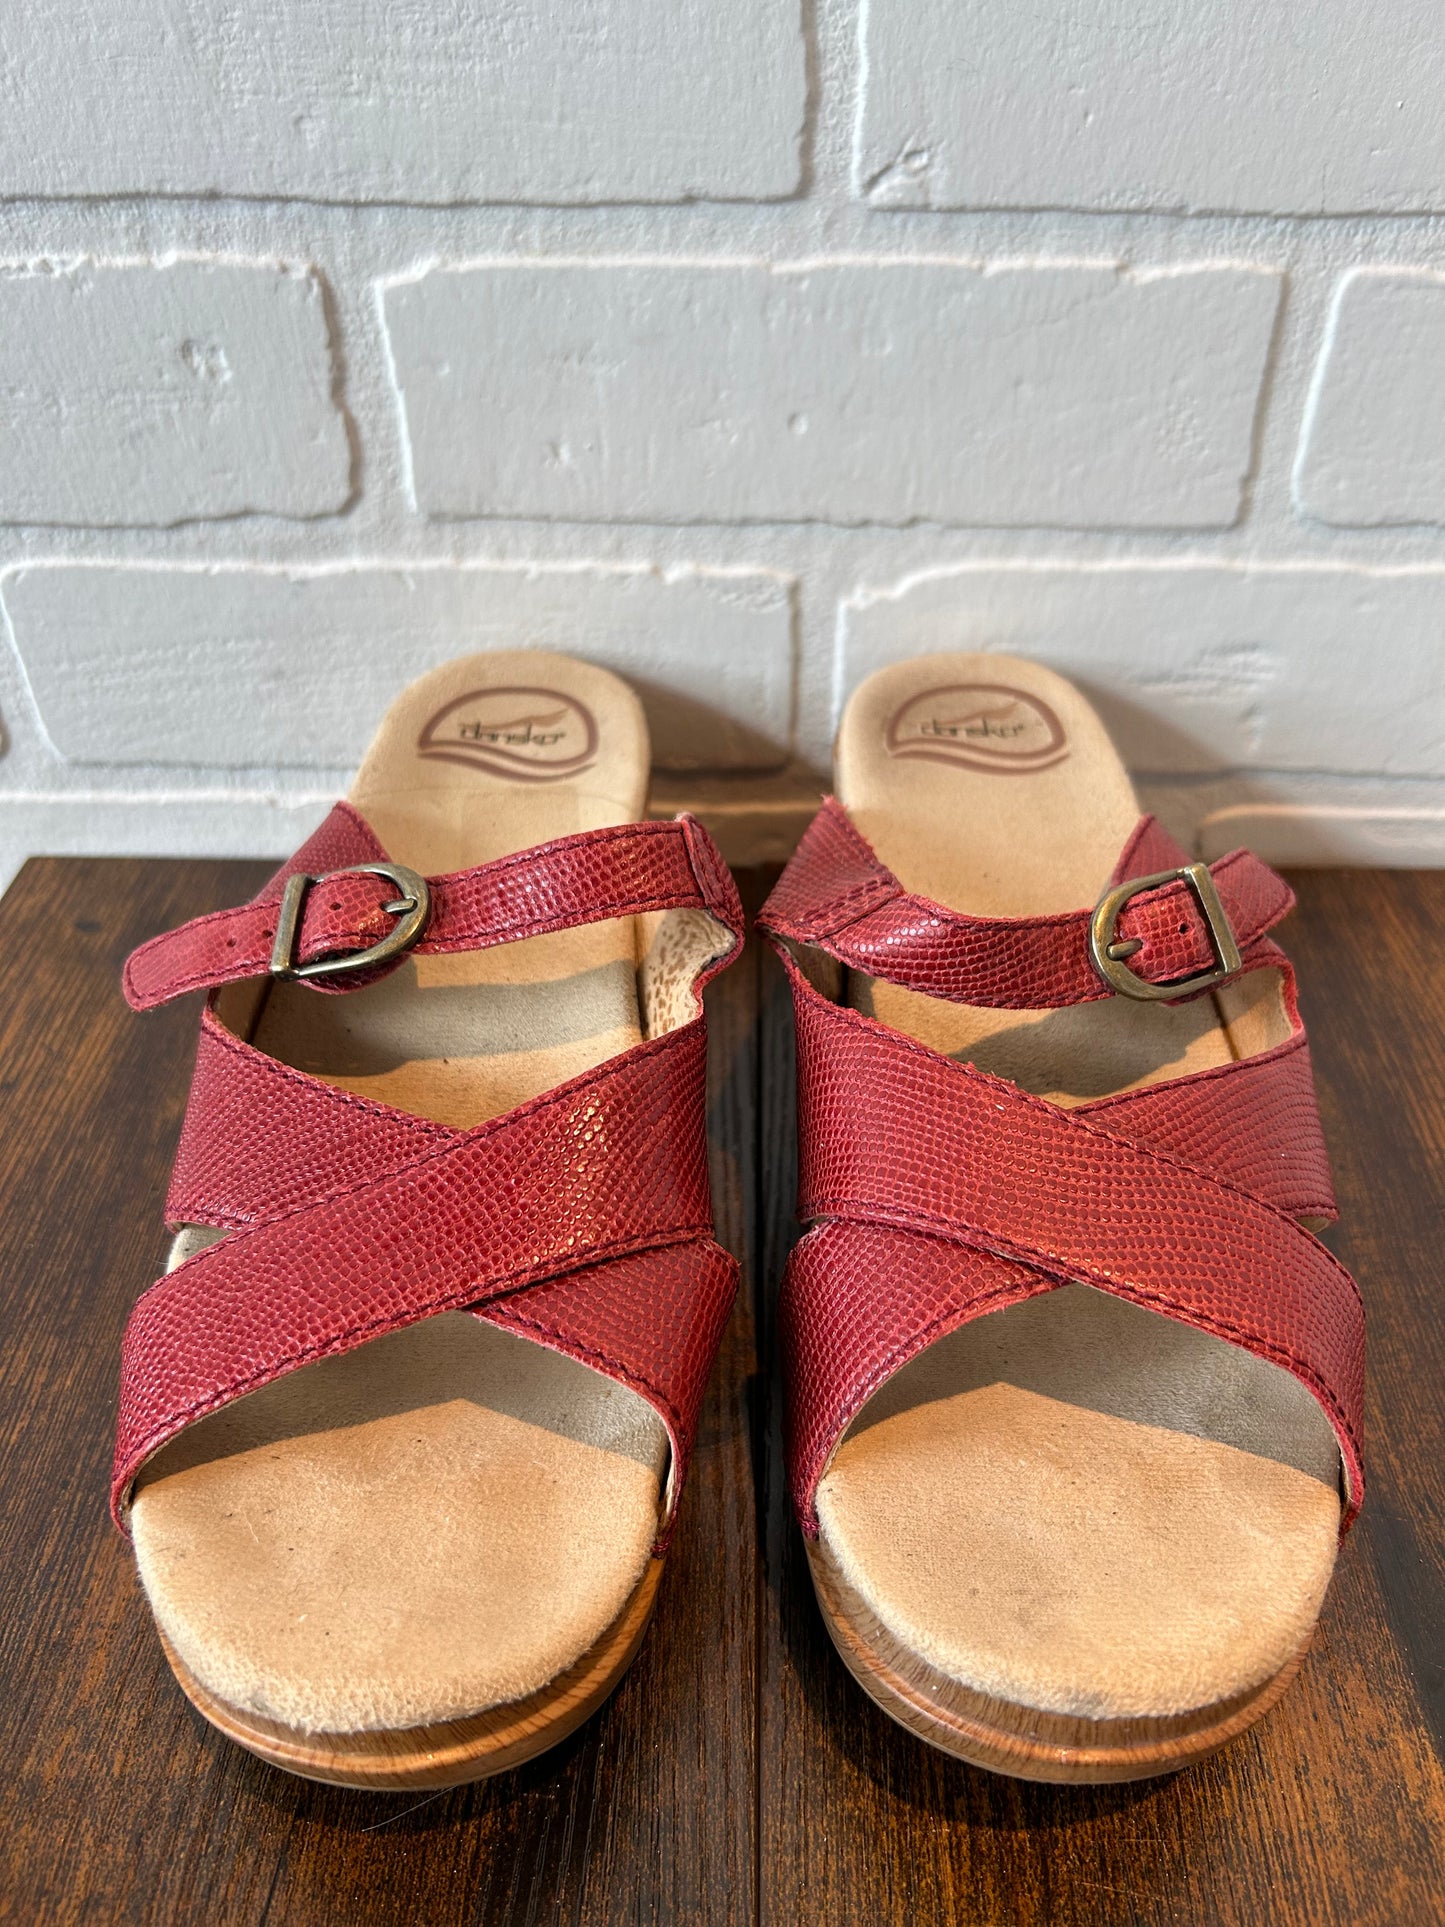 Sandals Flats By Dansko  Size: 8.5